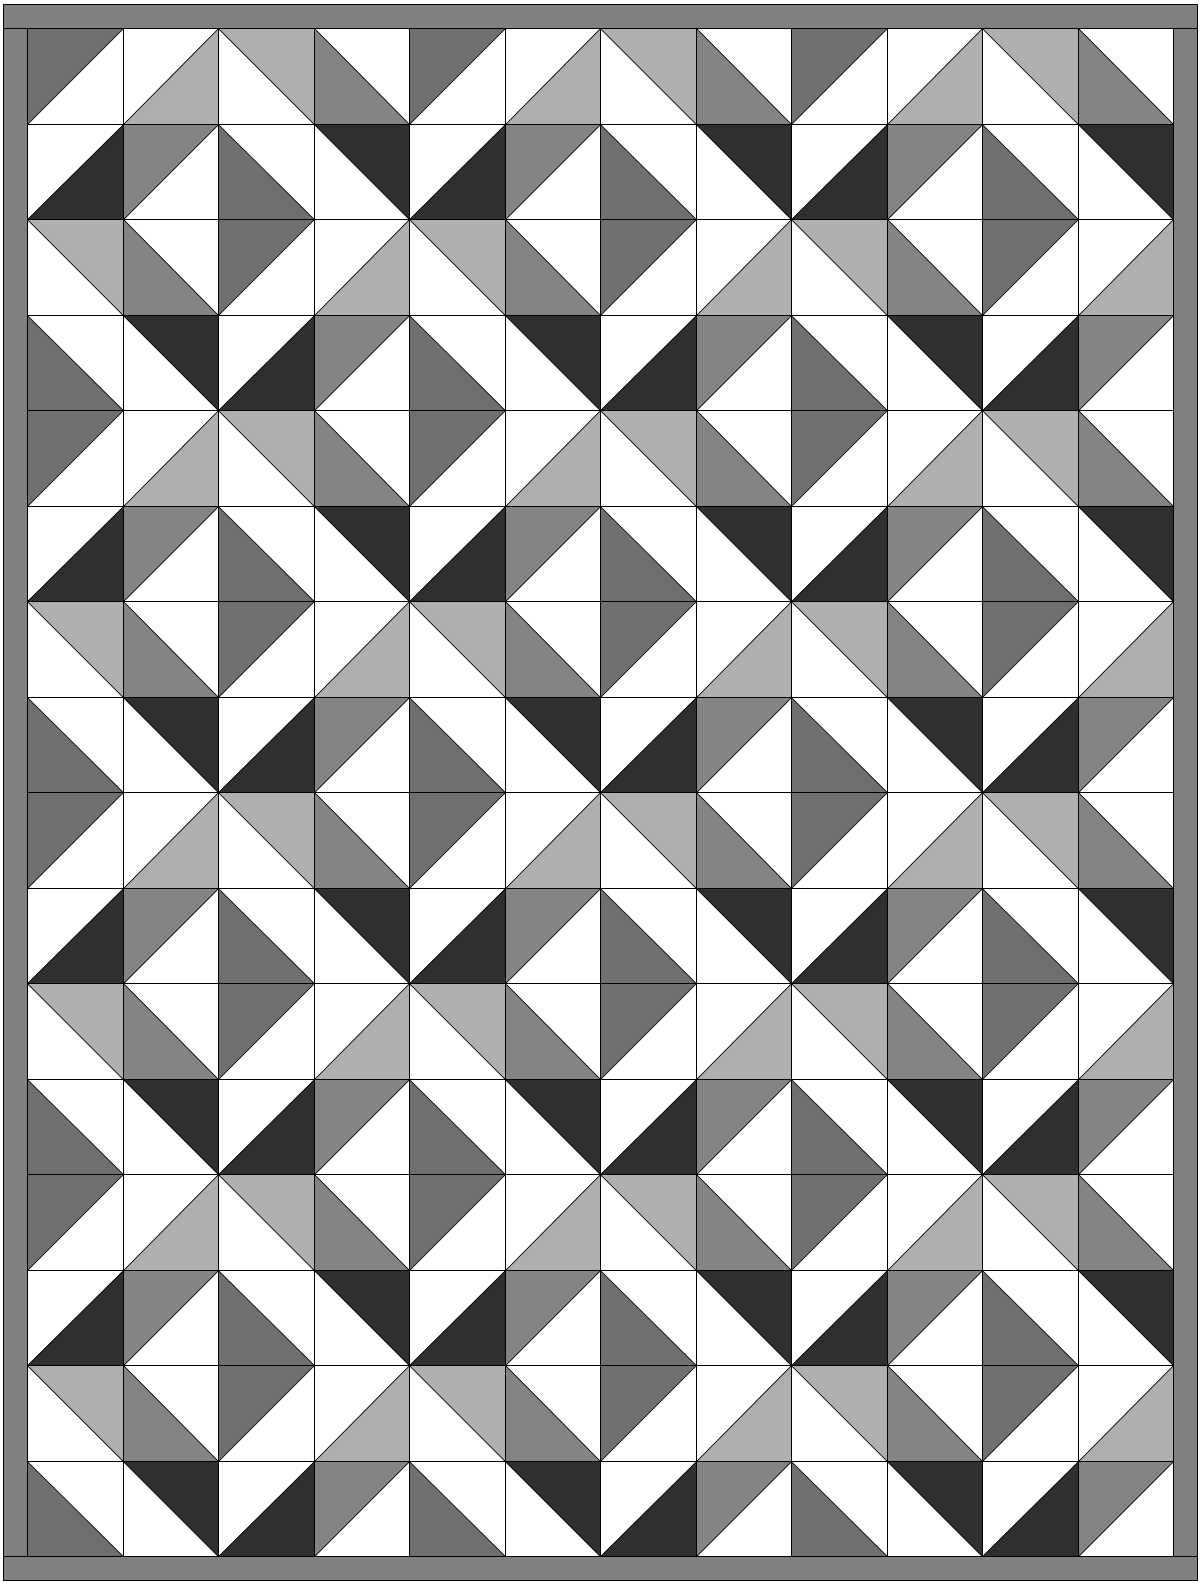 6a00d8341c1b7353ef01a5119be901970c Pi 1200 1584 Half Square Triangle Quilts Pattern Half Square Triangle Quilts Quilts